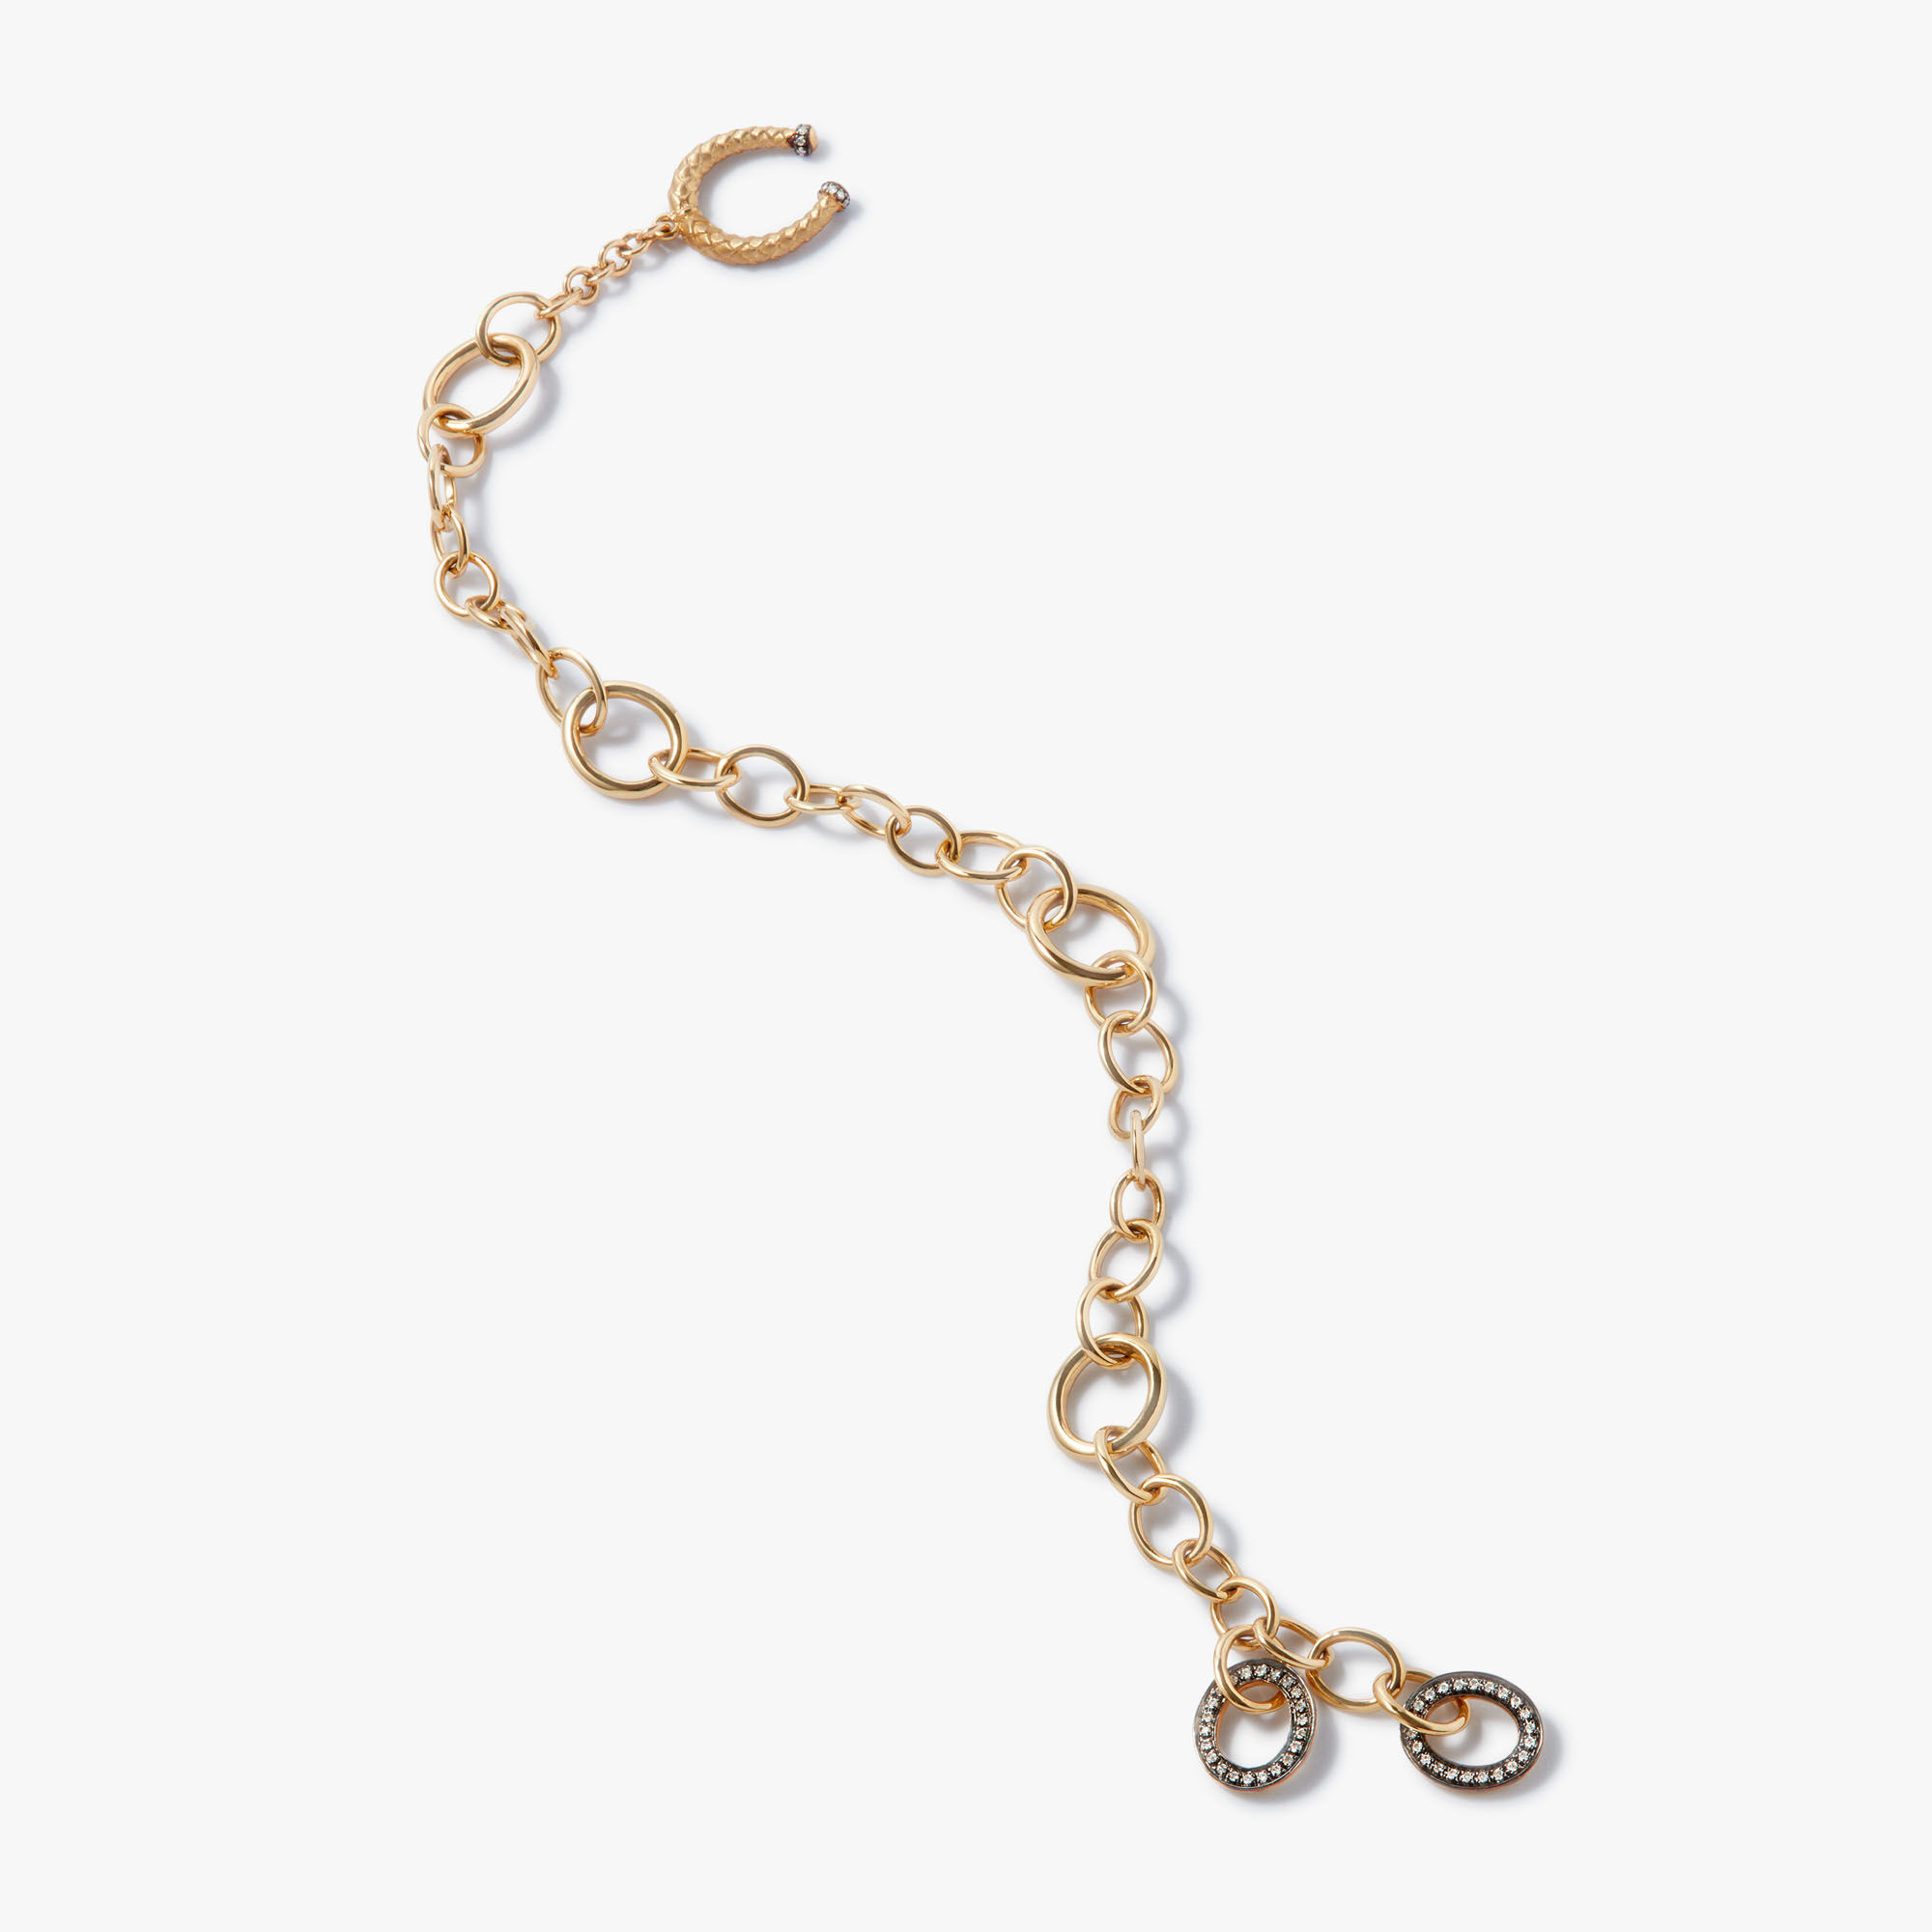 Build Your Luxury 18ct Gold Charm Bracelet — Annoushka Australia